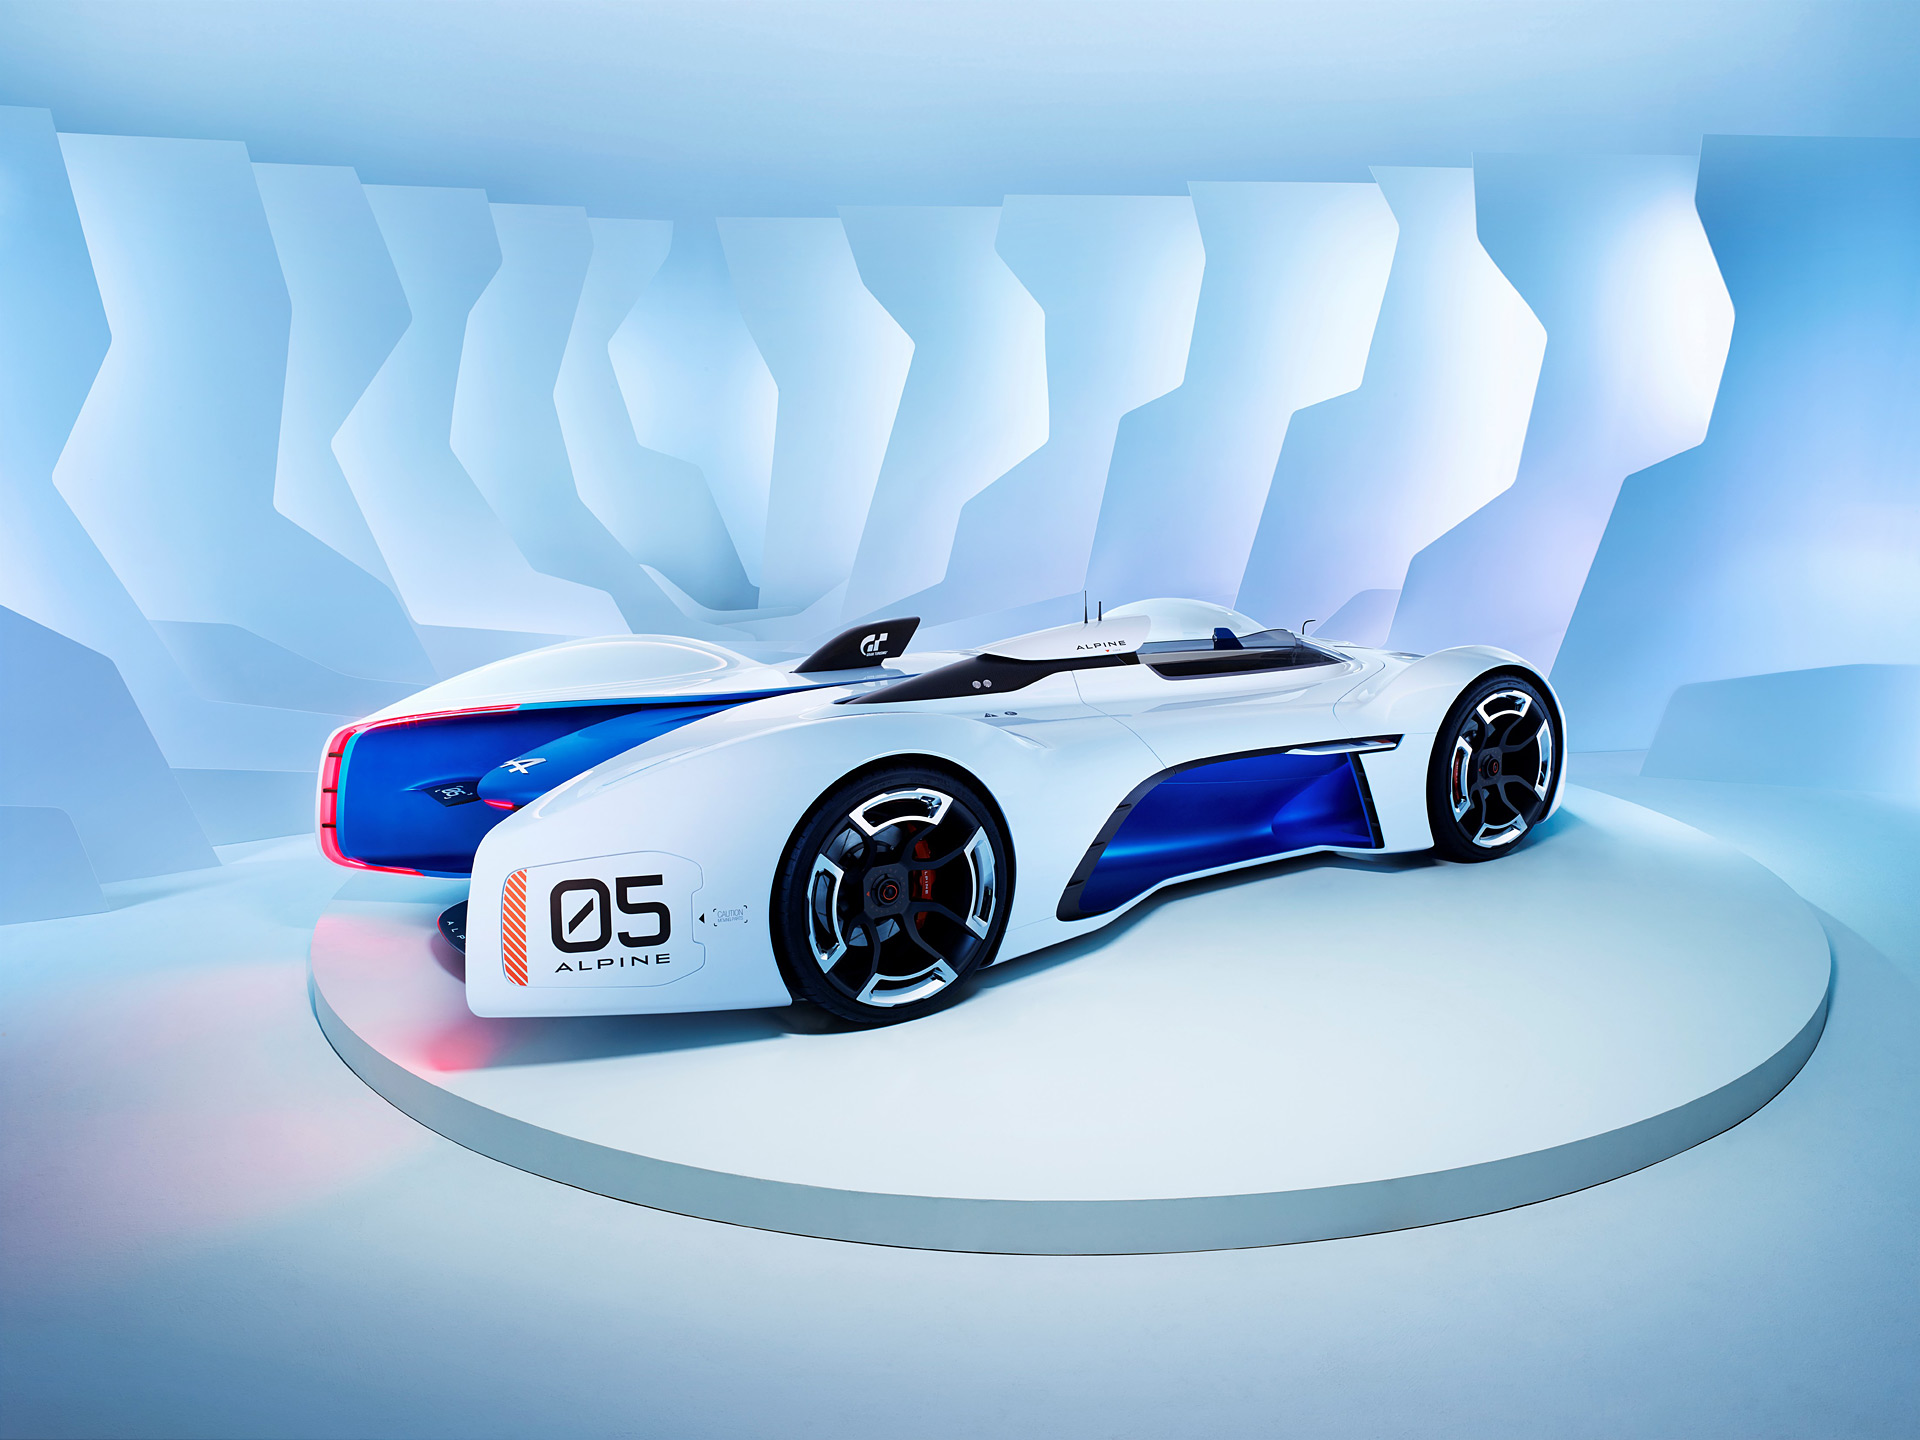  2015 Renault Alpine Vision Gran Turismo Concept Wallpaper.